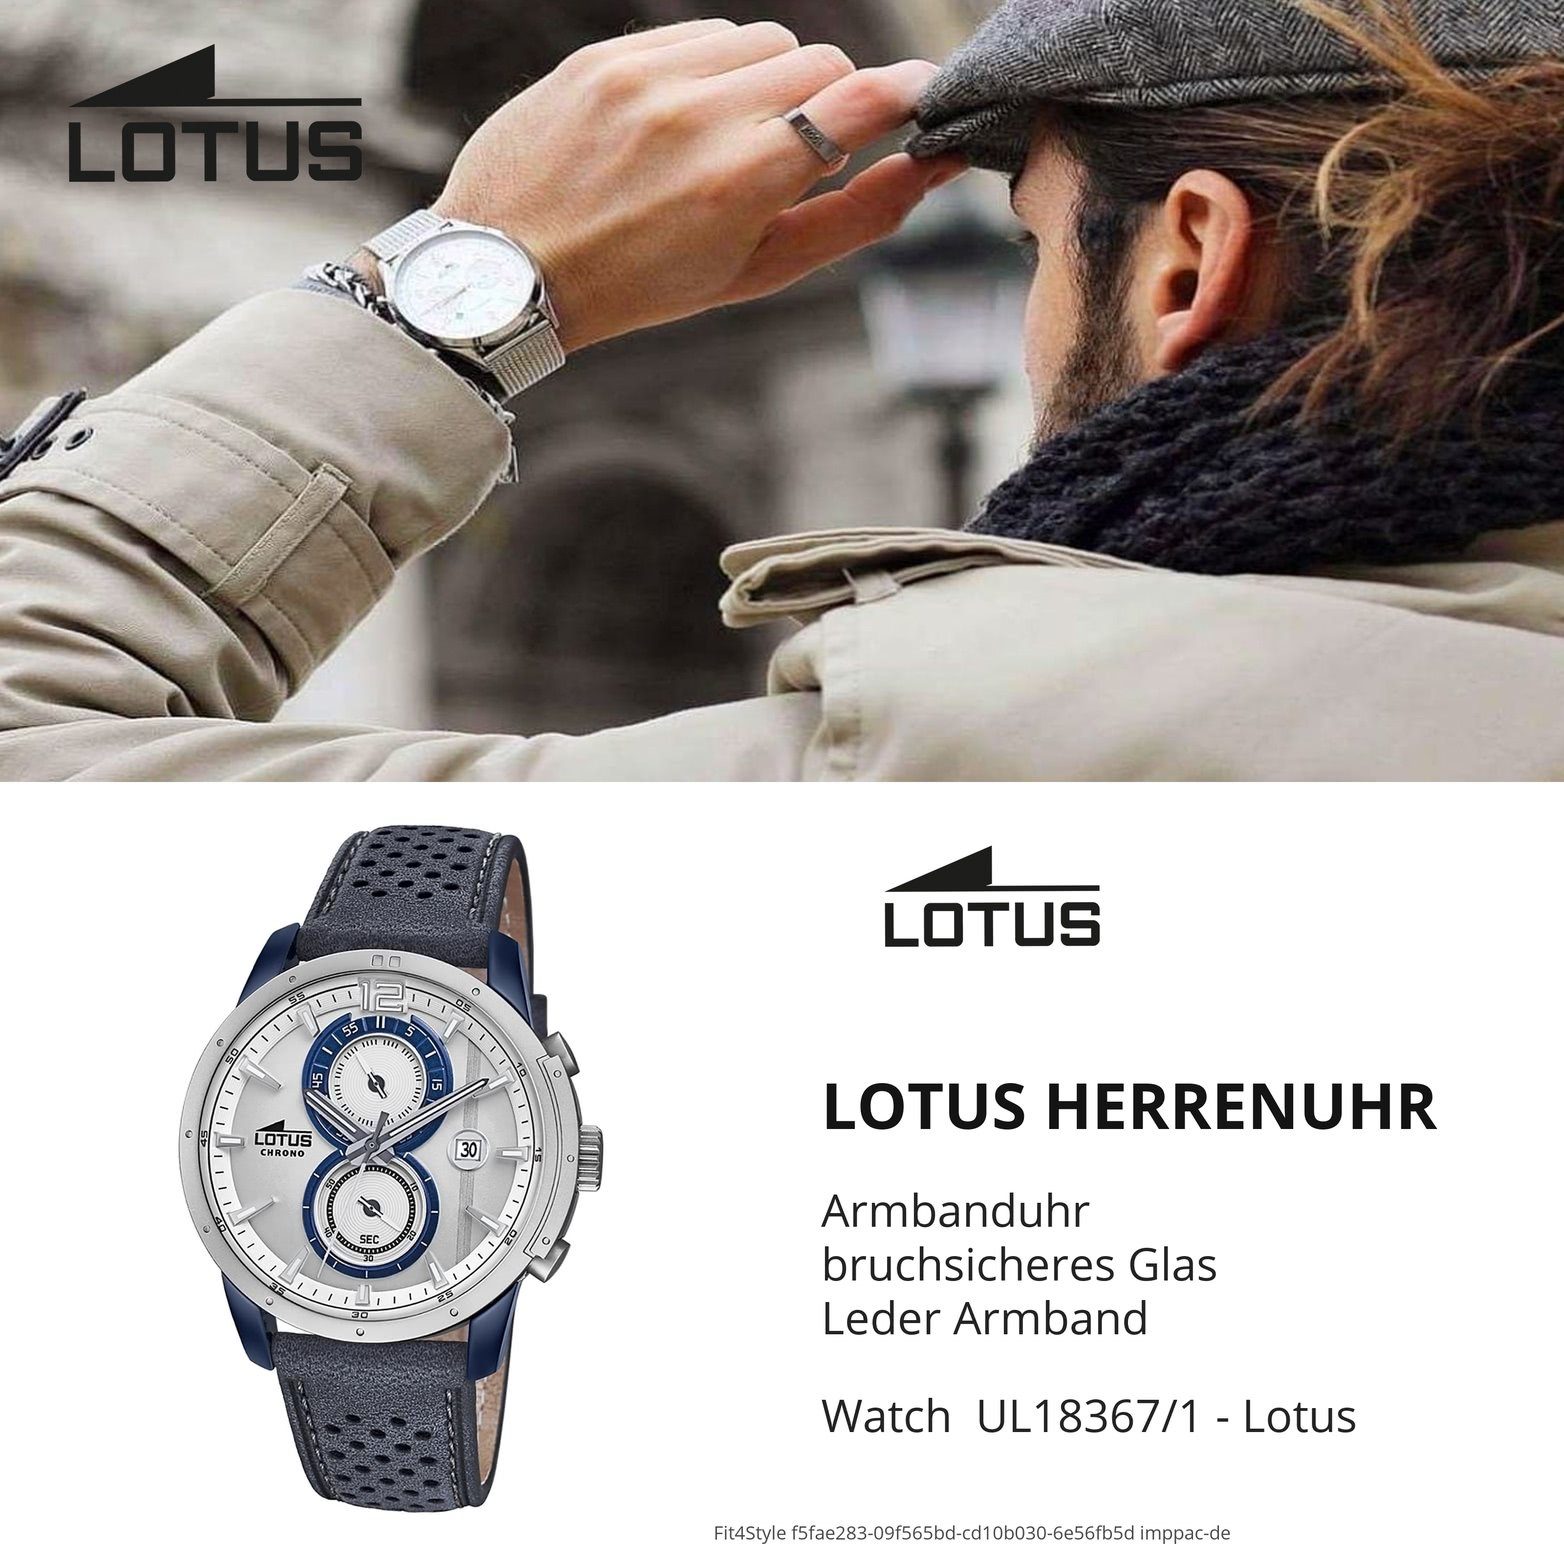 Herrenuhr Chrono Lotus mit Uhr Sport-Sty Herren (ca. rundes 44mm), Chronograph Lederarmband, Lotus Gehäuse, groß Leder L18367/1,